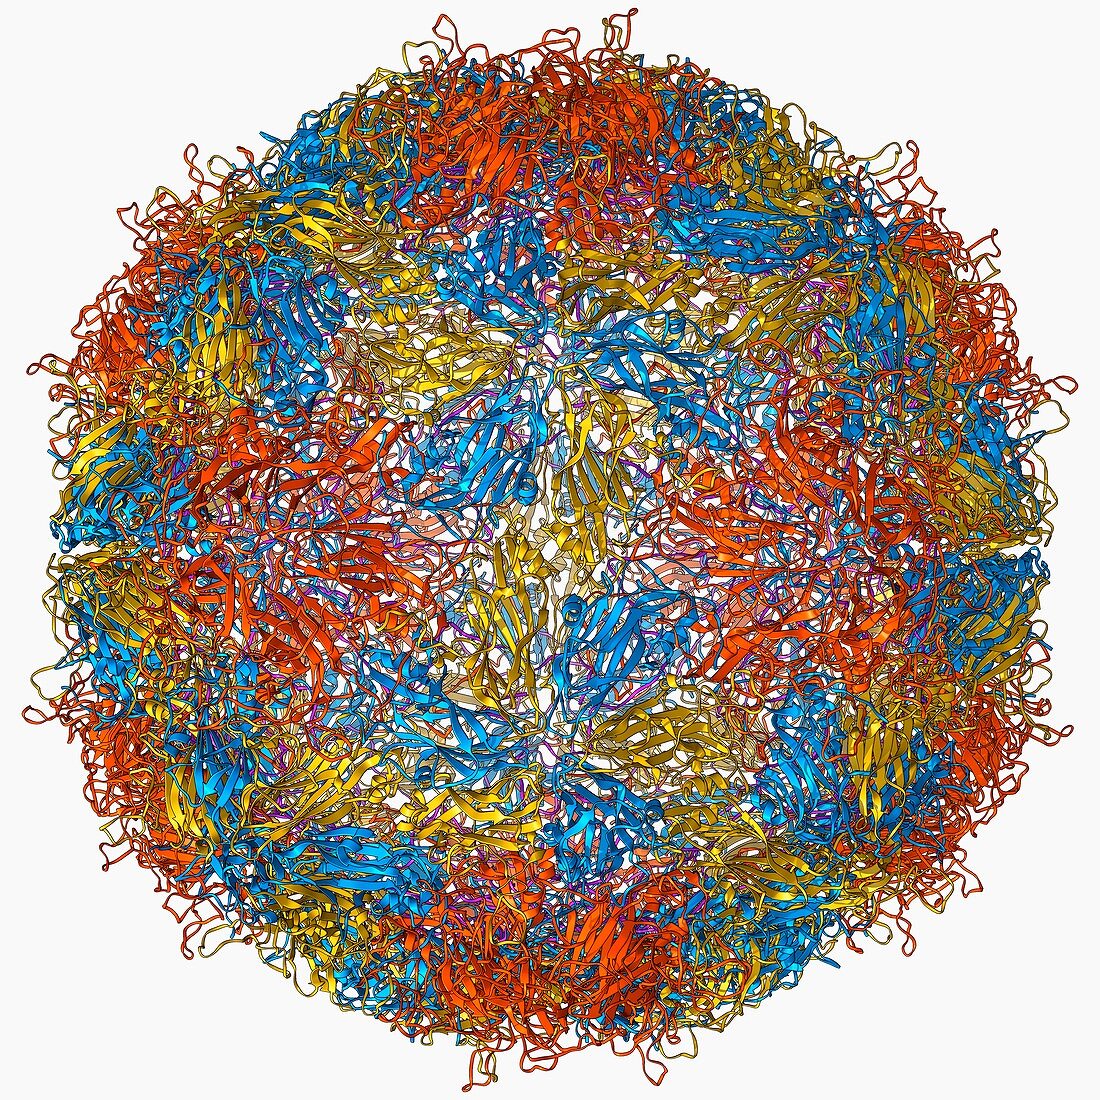 Mengovirus capsid,molecular model